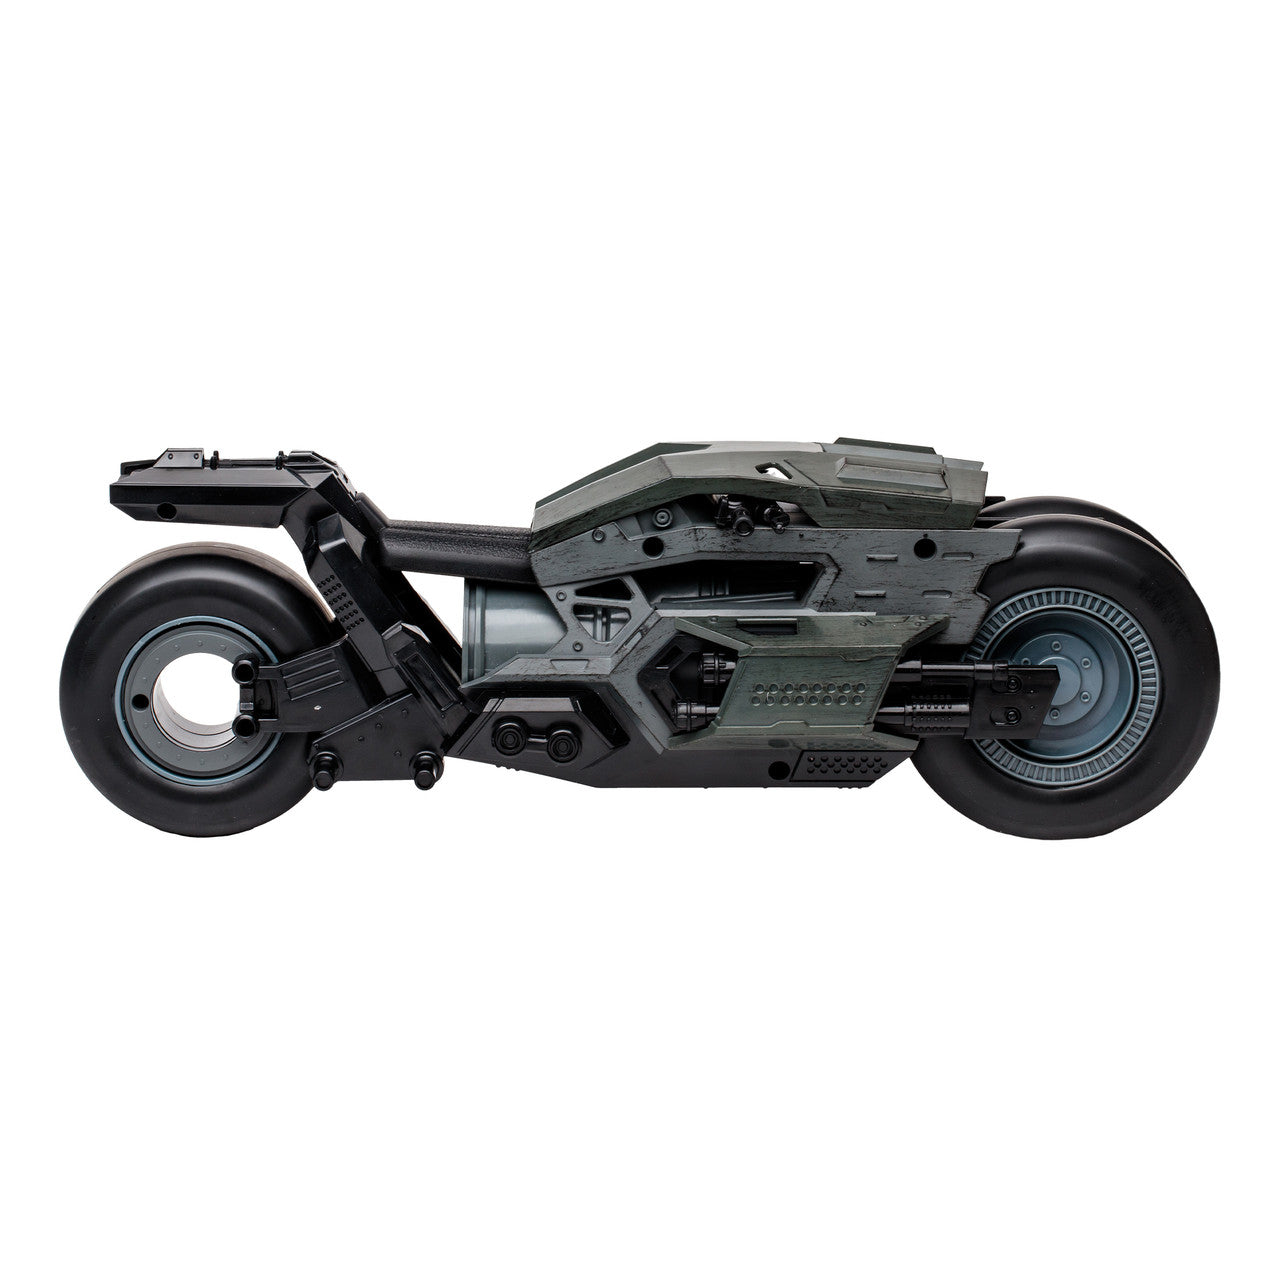 Batcycle (The Flash Movie) Vehicle by McFarlane Toys -McFarlane Toys - India - www.superherotoystore.com